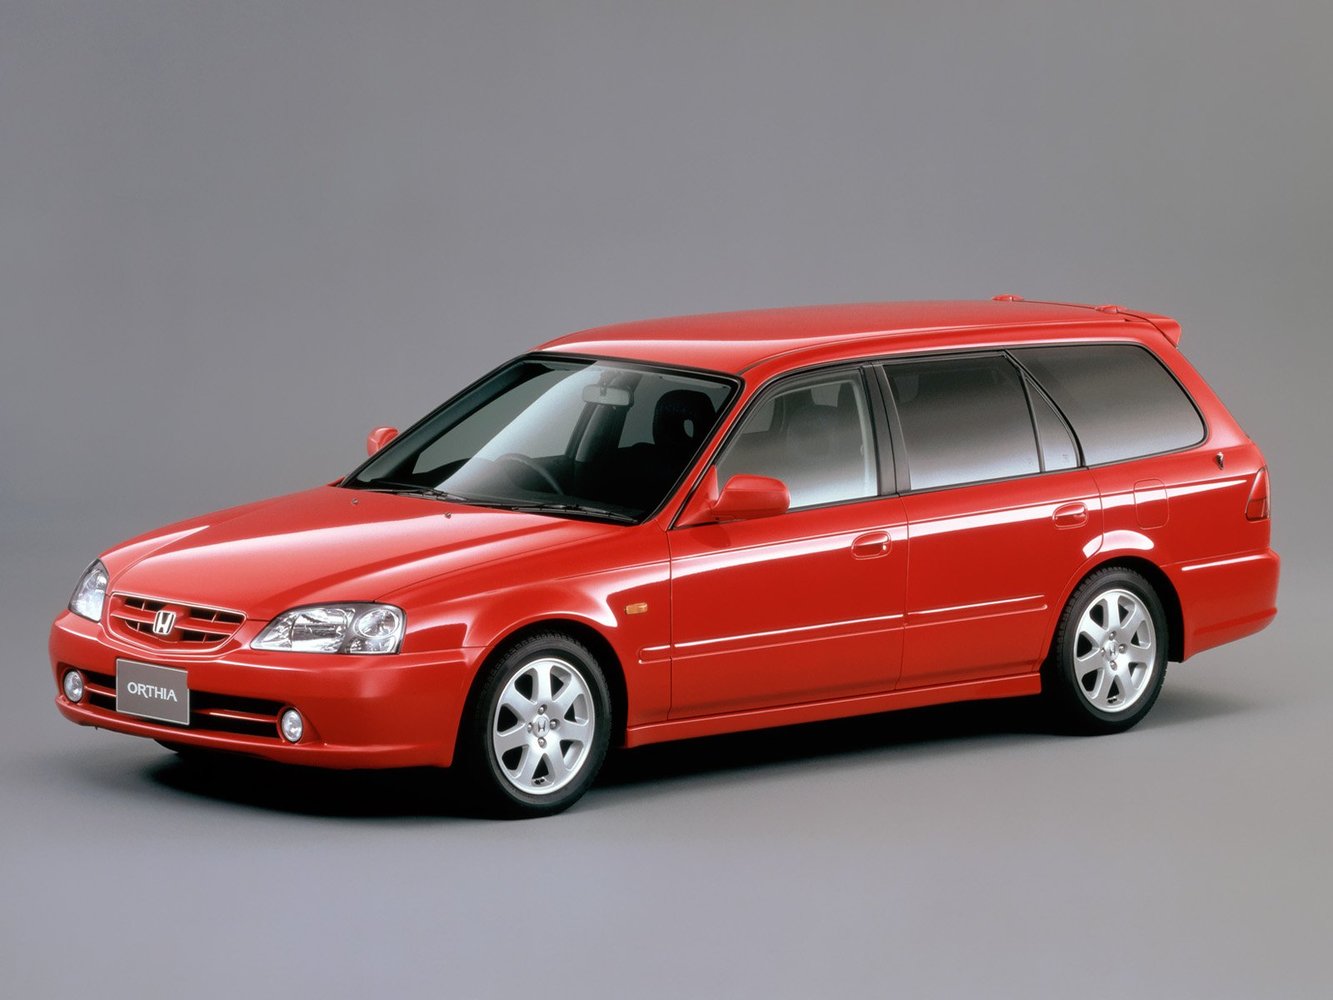 Honda Orthia 1999 - 2002